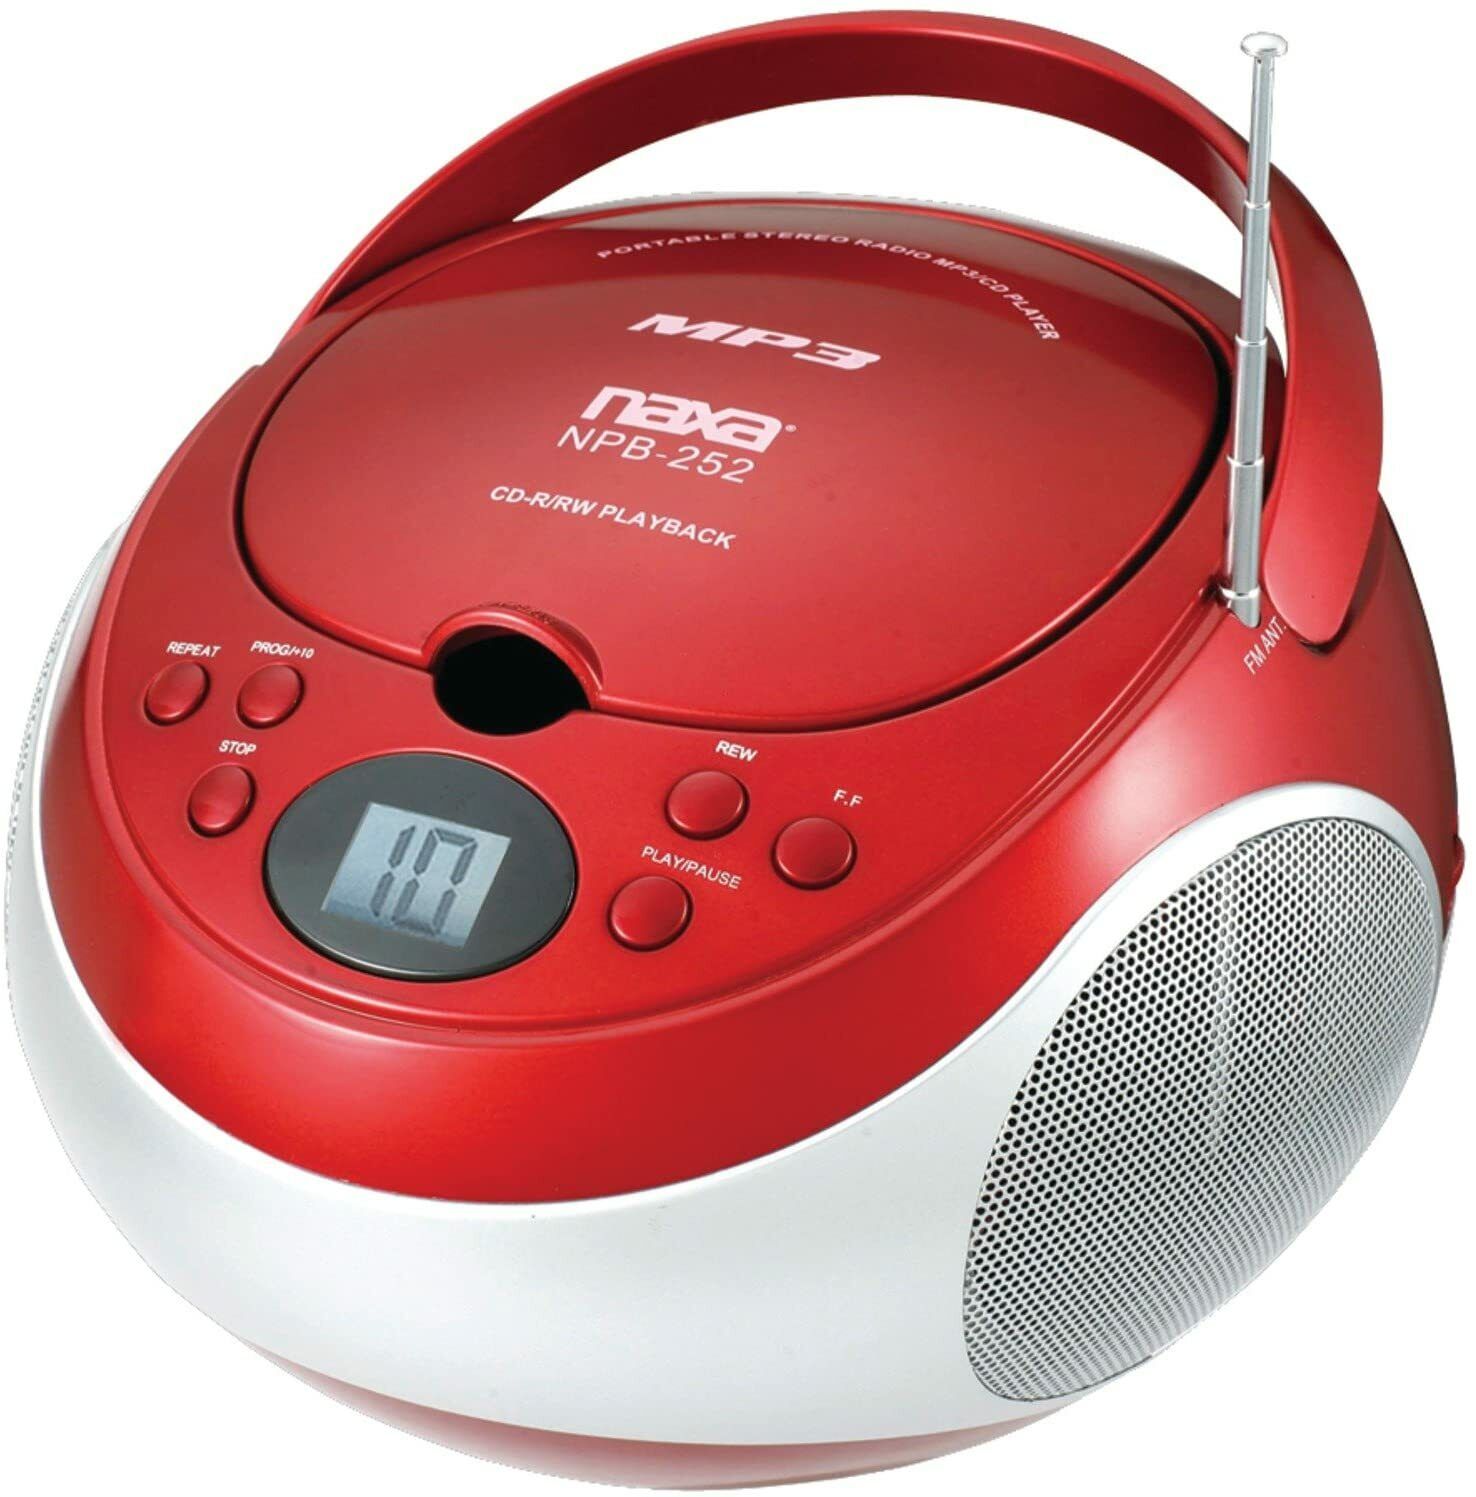 Naxa NPB-252 Portable MP3 CD Player with AM/FM Stereo Radio & AUX - Red